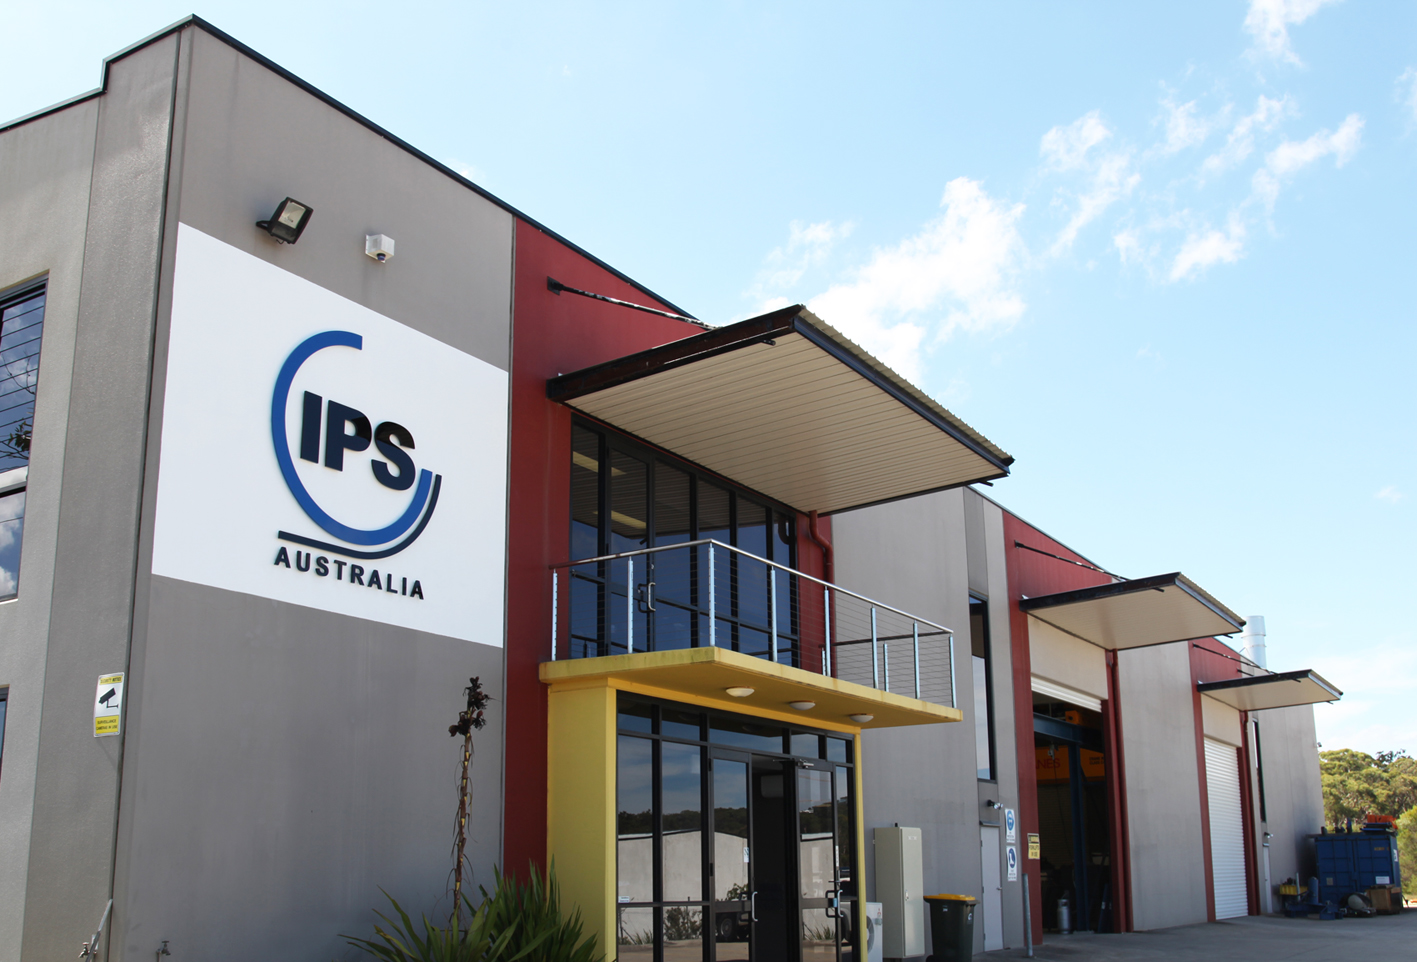 IPS Australia – 3D Building Signage